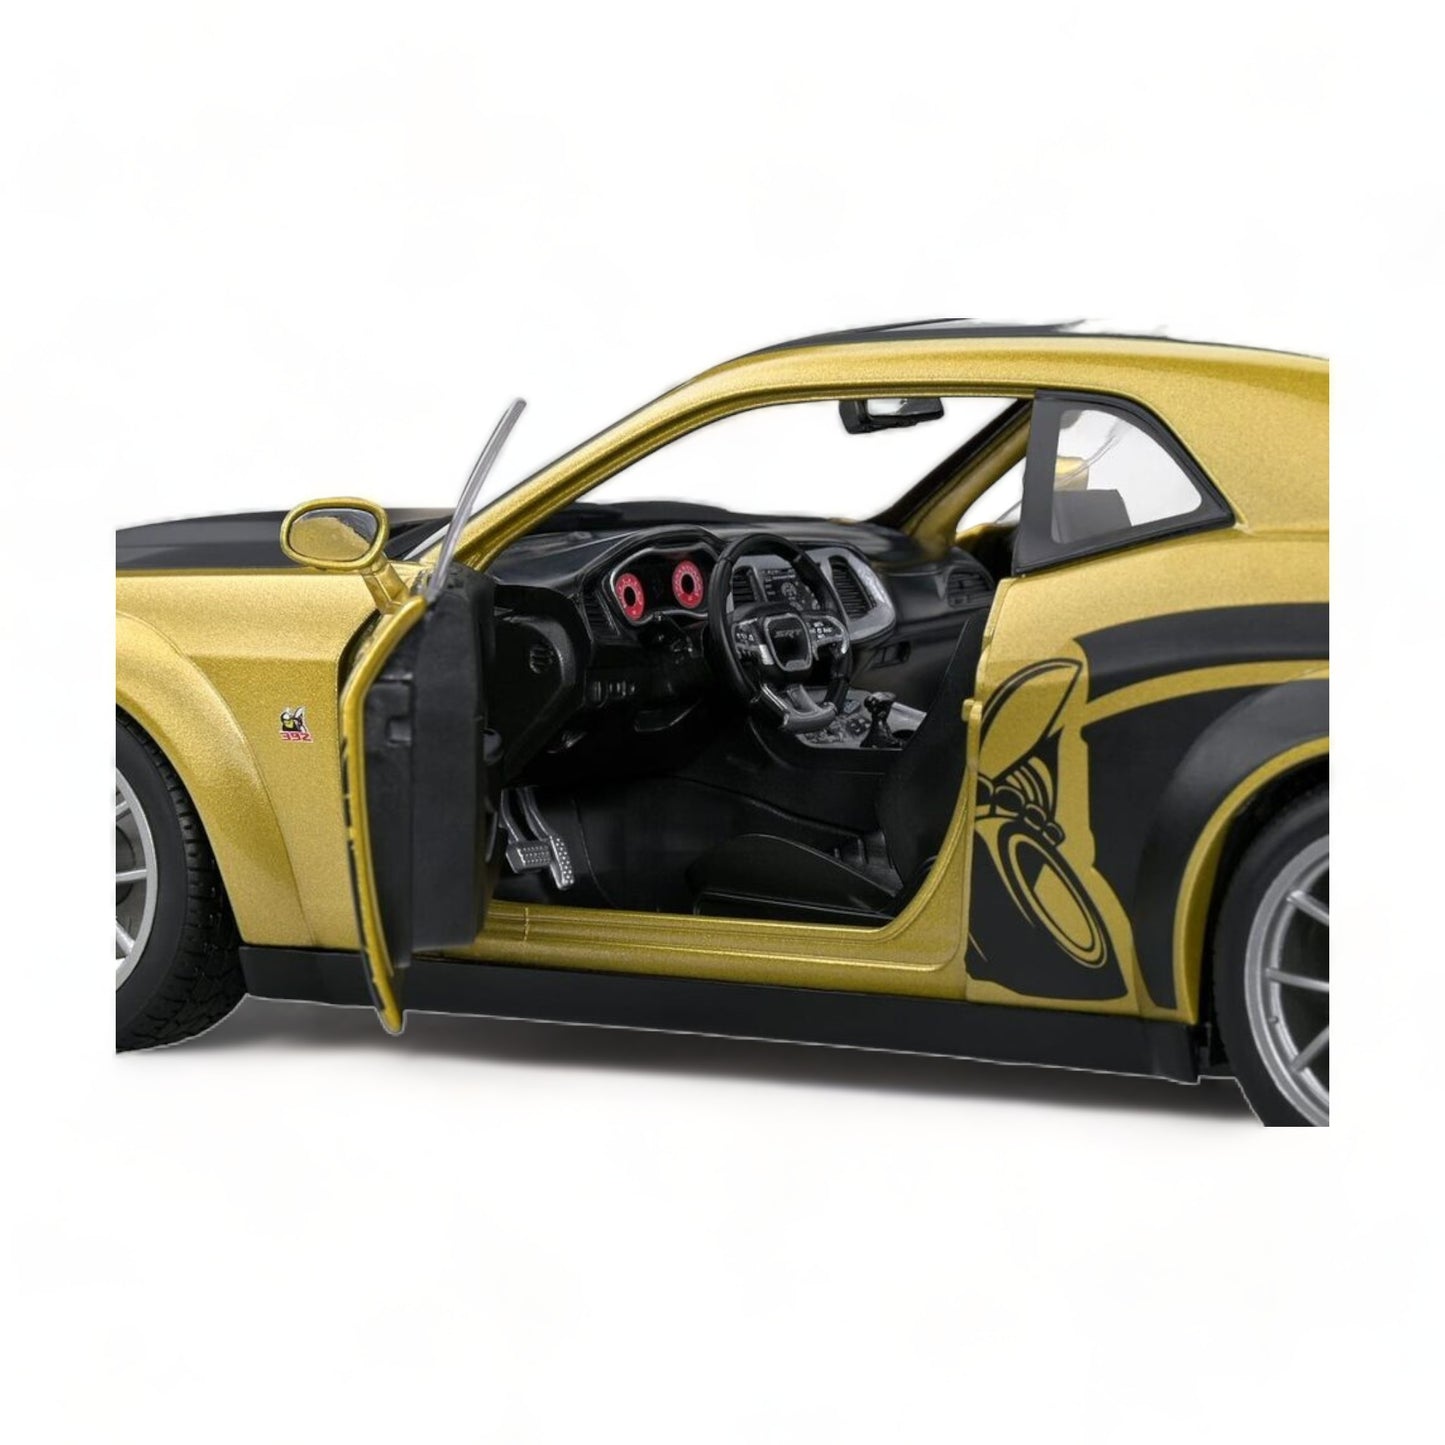 1/18 Diecast Dodge Challenger R/T SCAT PACK Widebody 2020 Gold Black Solido|Sold in Dturman.com Dubai UAE.